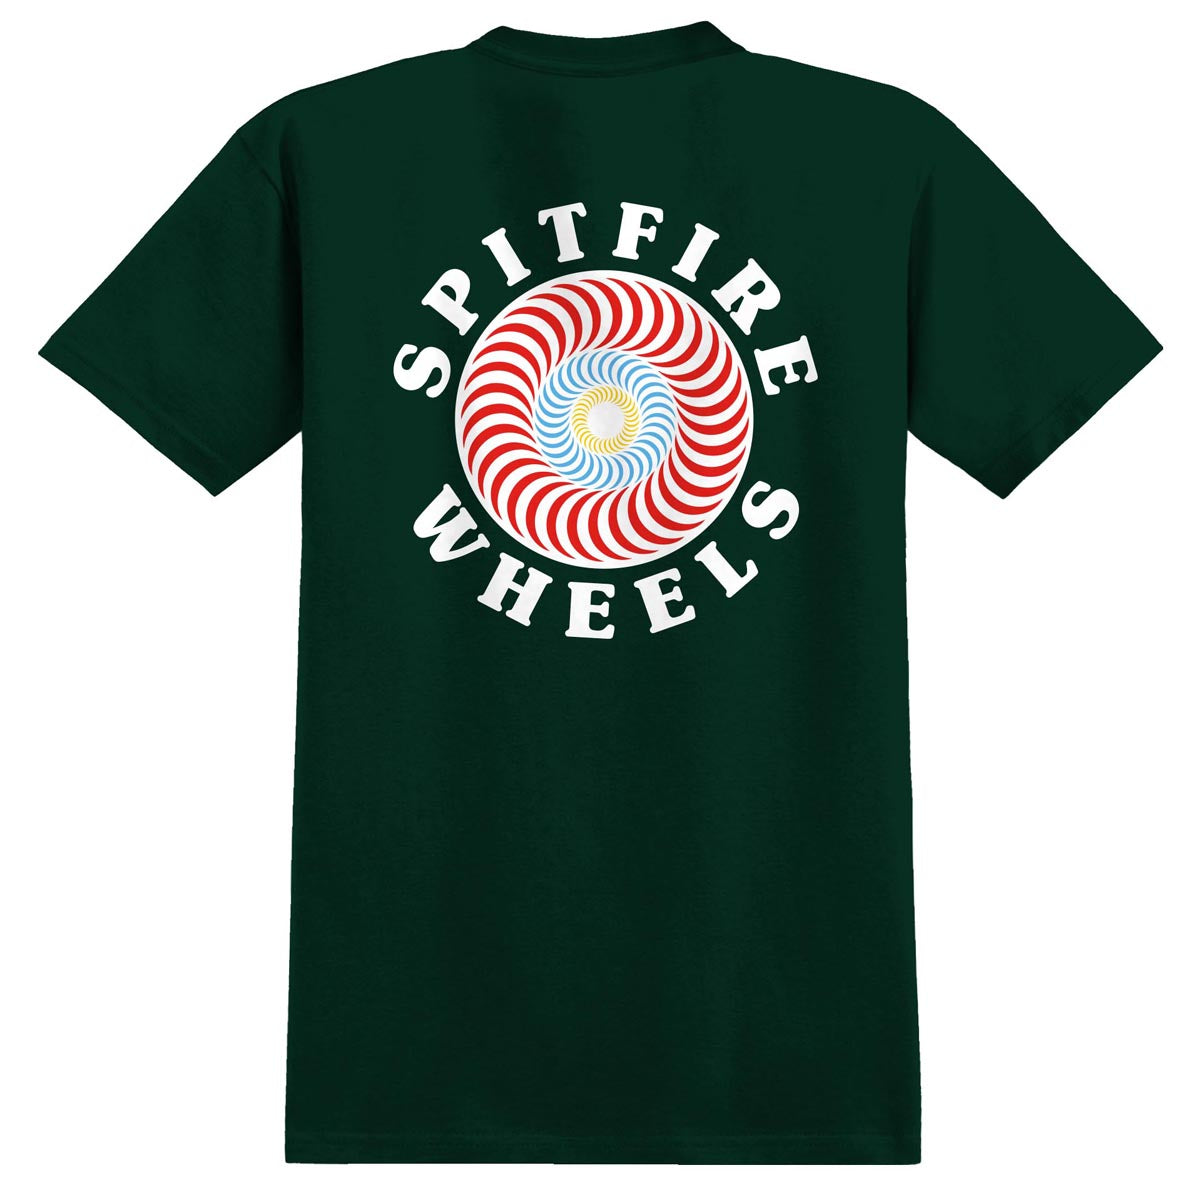 Spitfire Og Classic Fill T-Shirt - Forest Green/Multi Color image 1